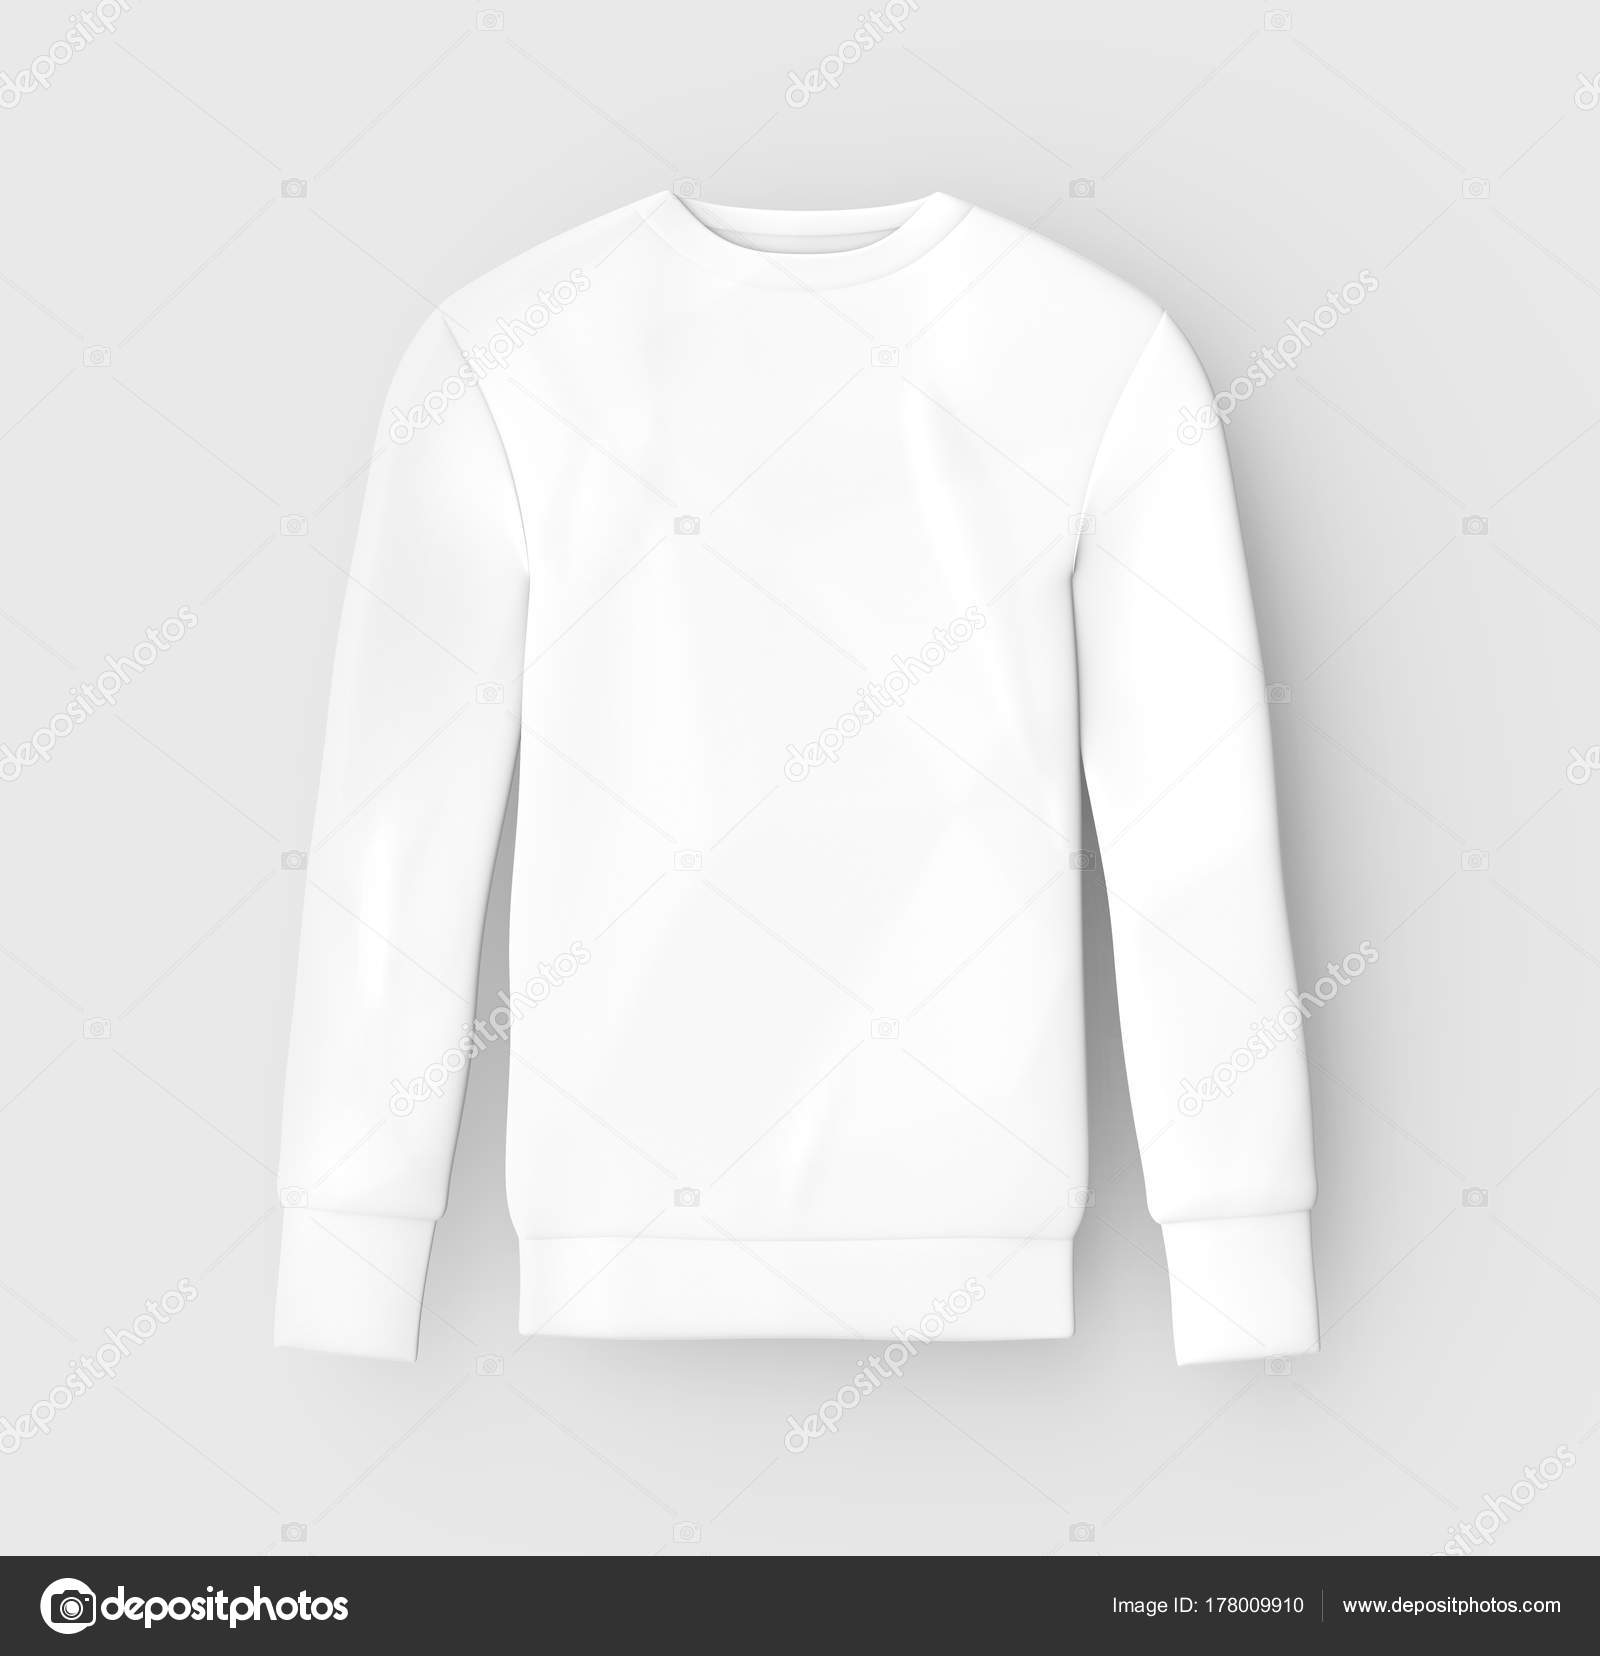 Download Sweatshirt Mockup Template Stock Photo Image By C Kchungtw 178009910